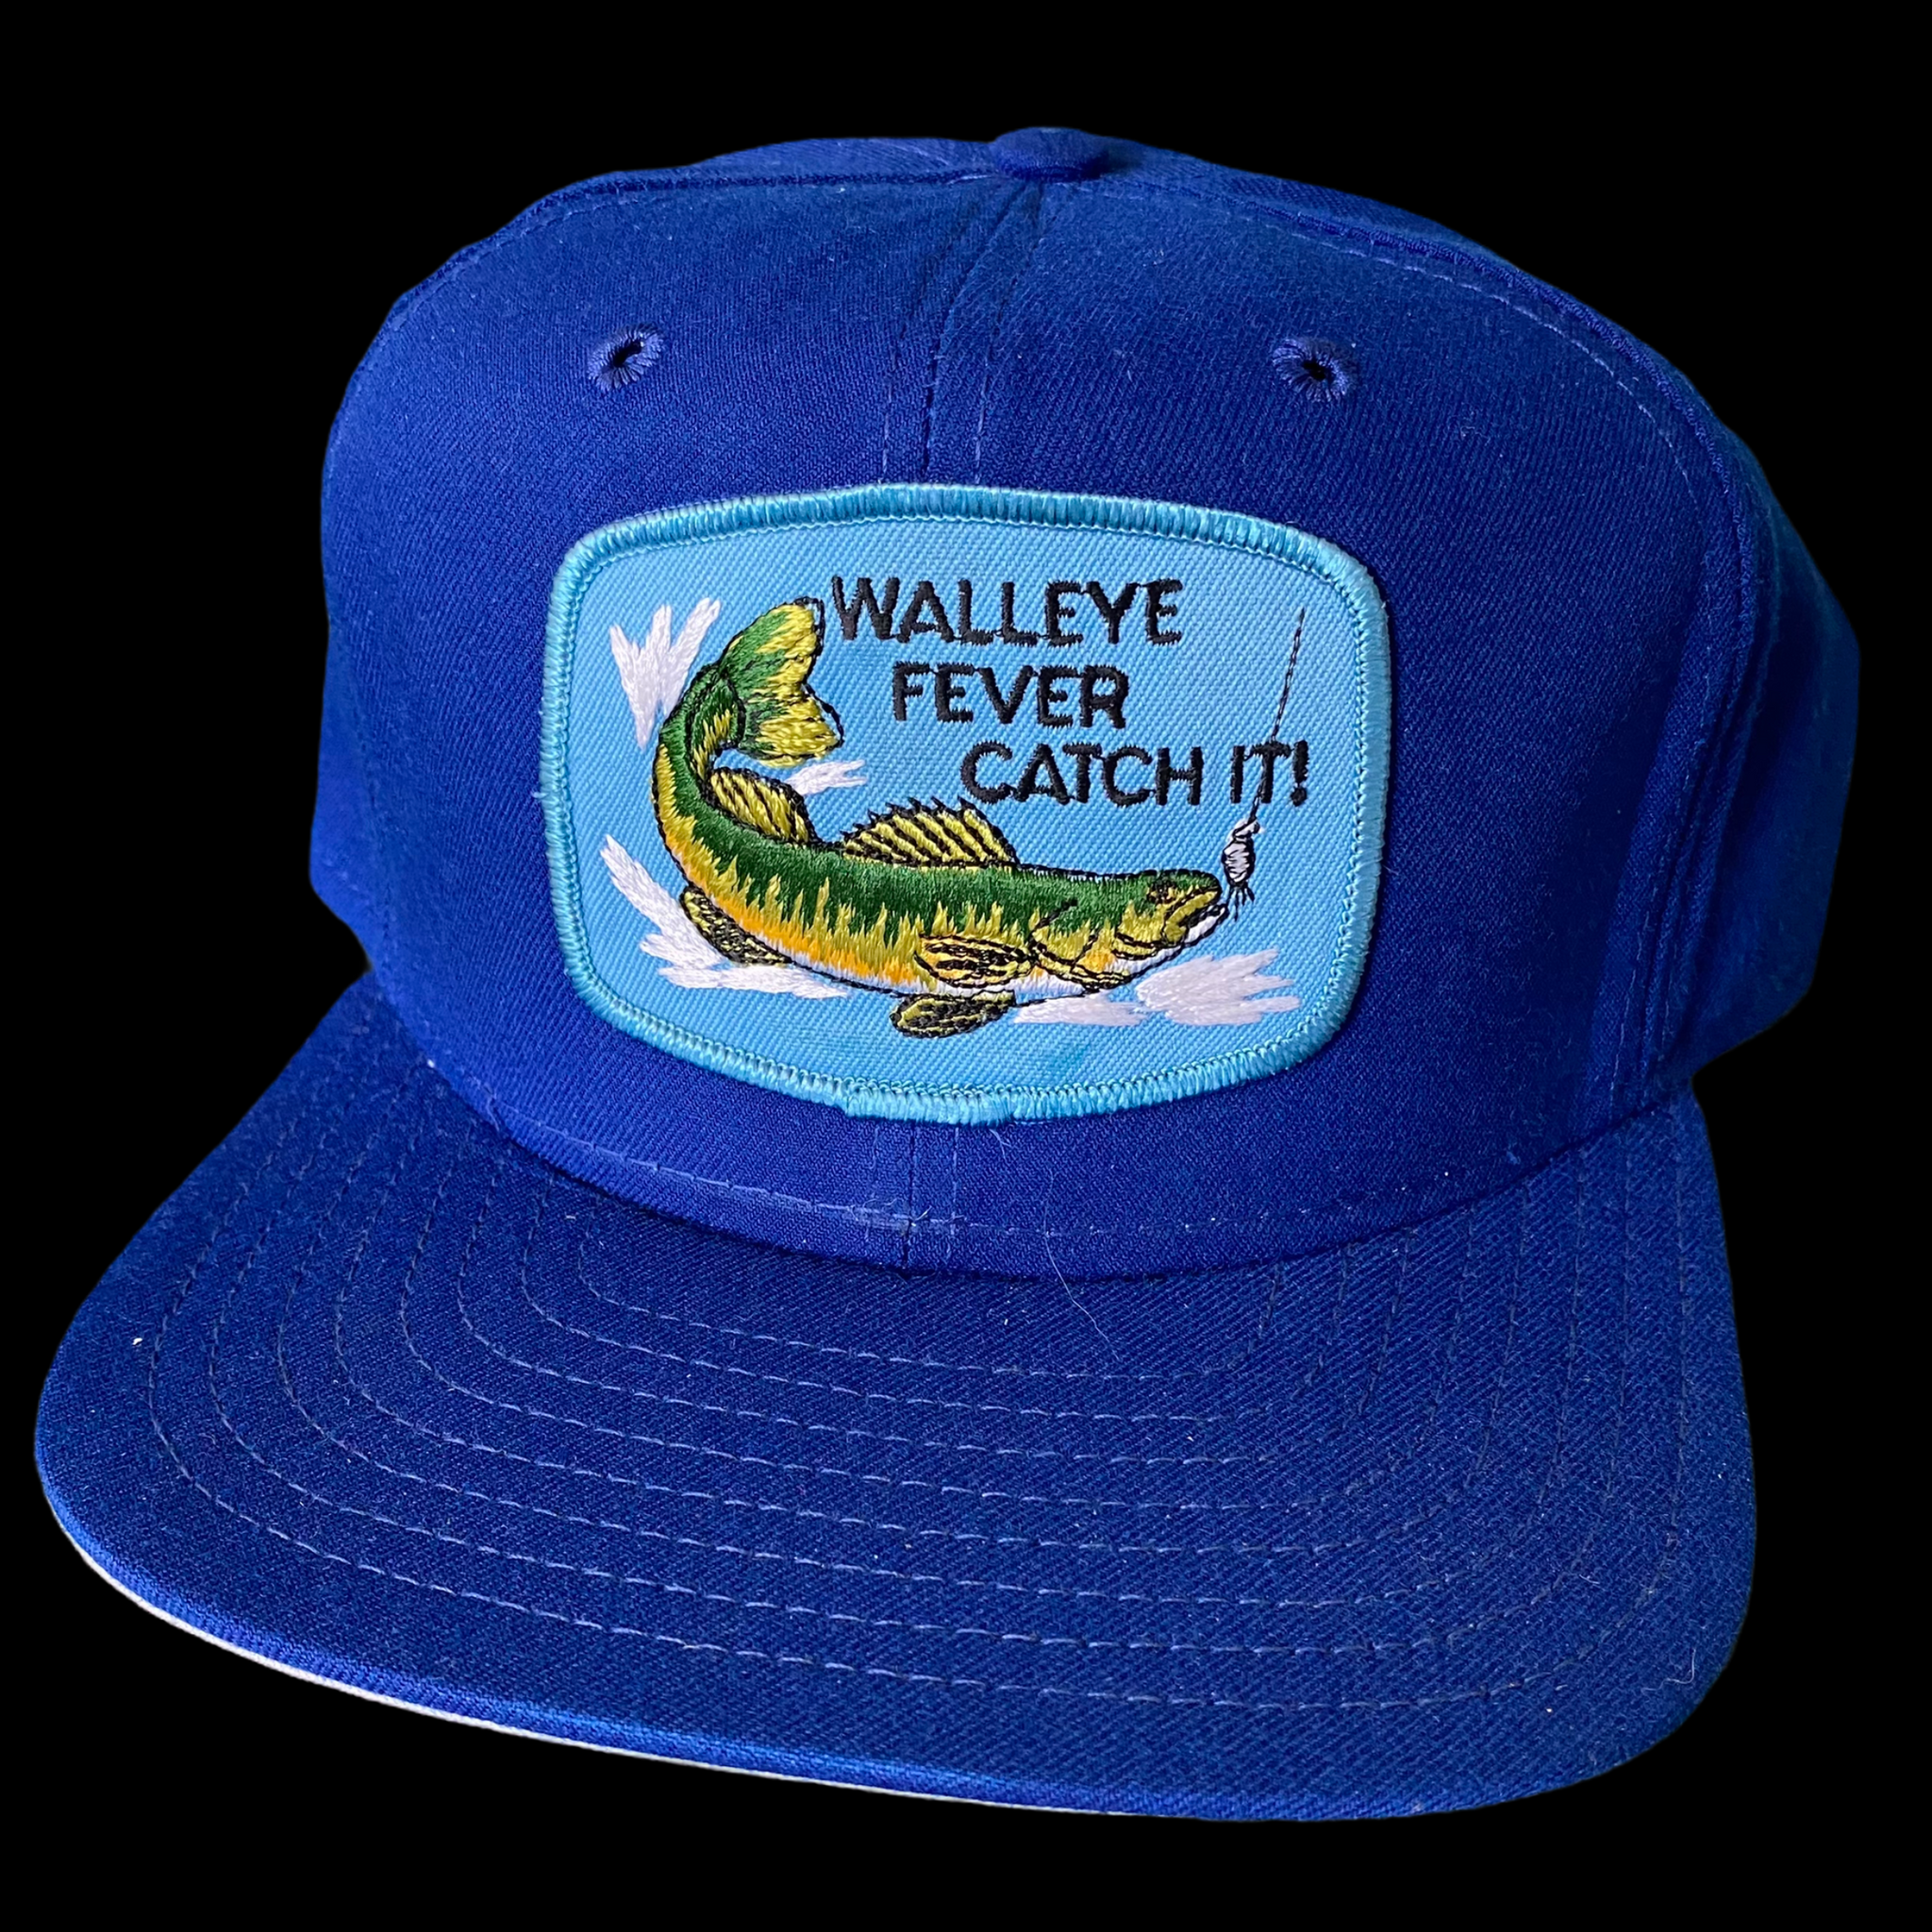 80s New era walleye snapback hat – Vintage Sponsor